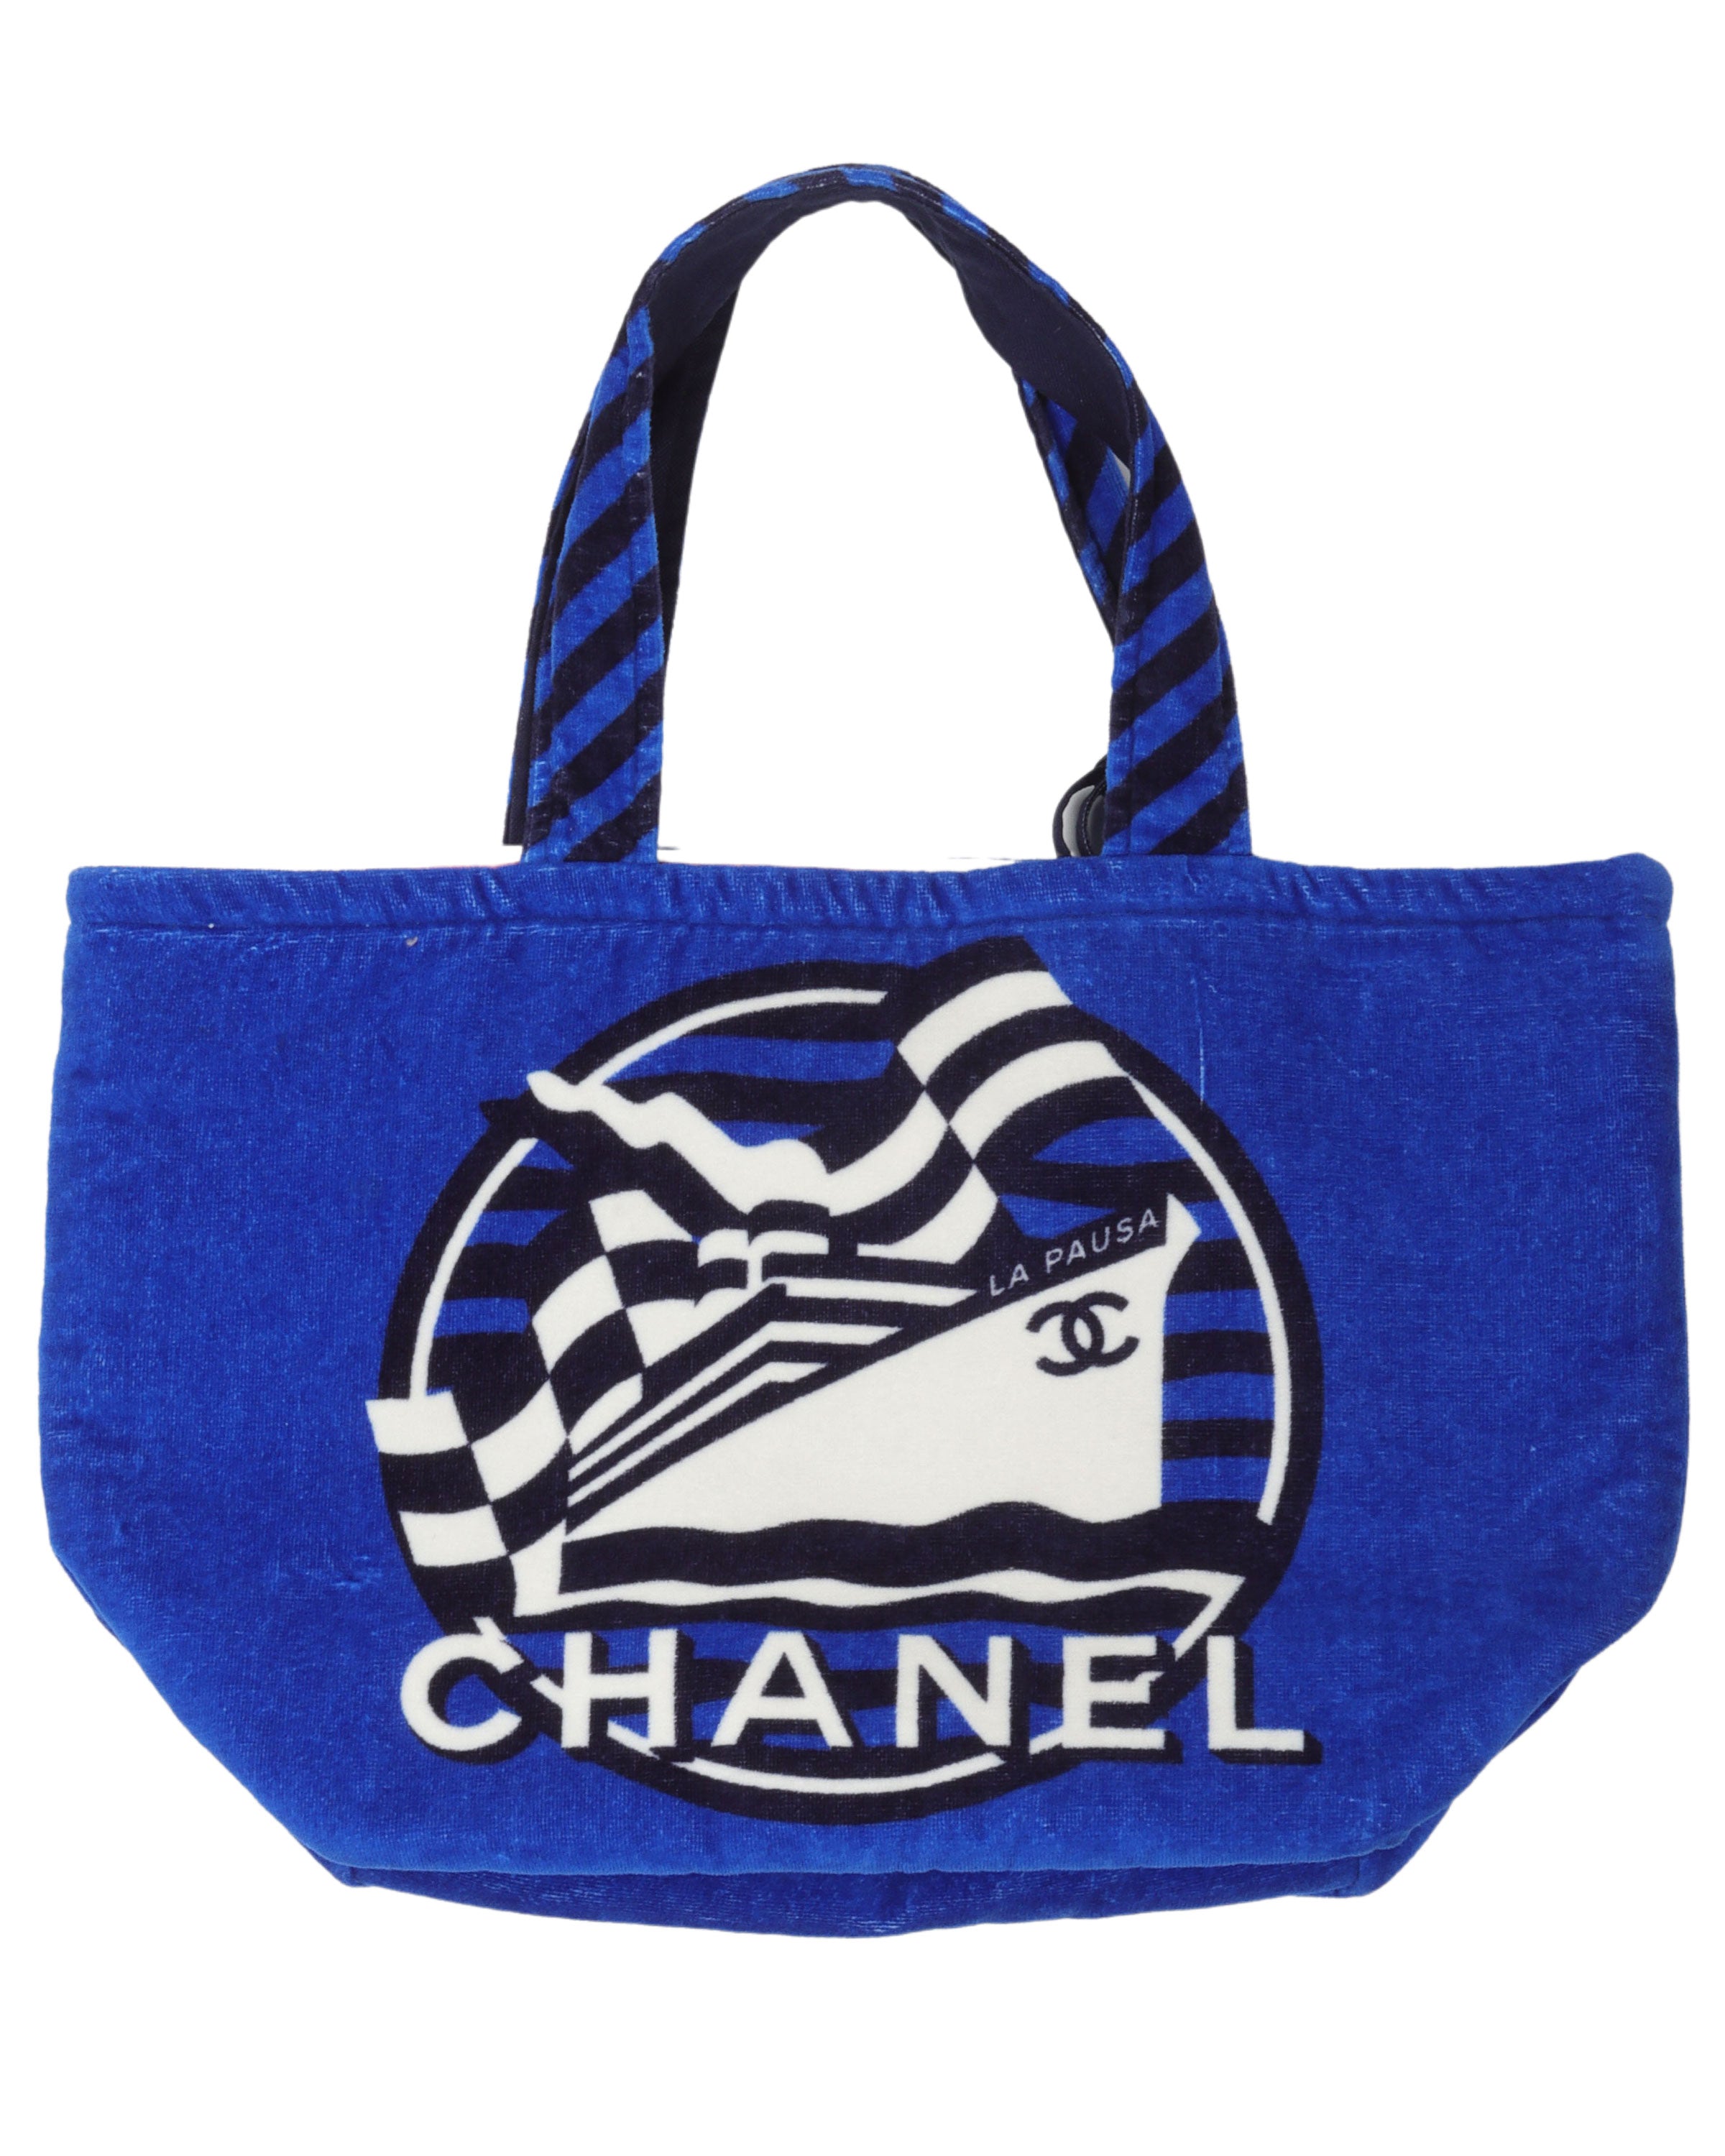 chanel beach bag tote